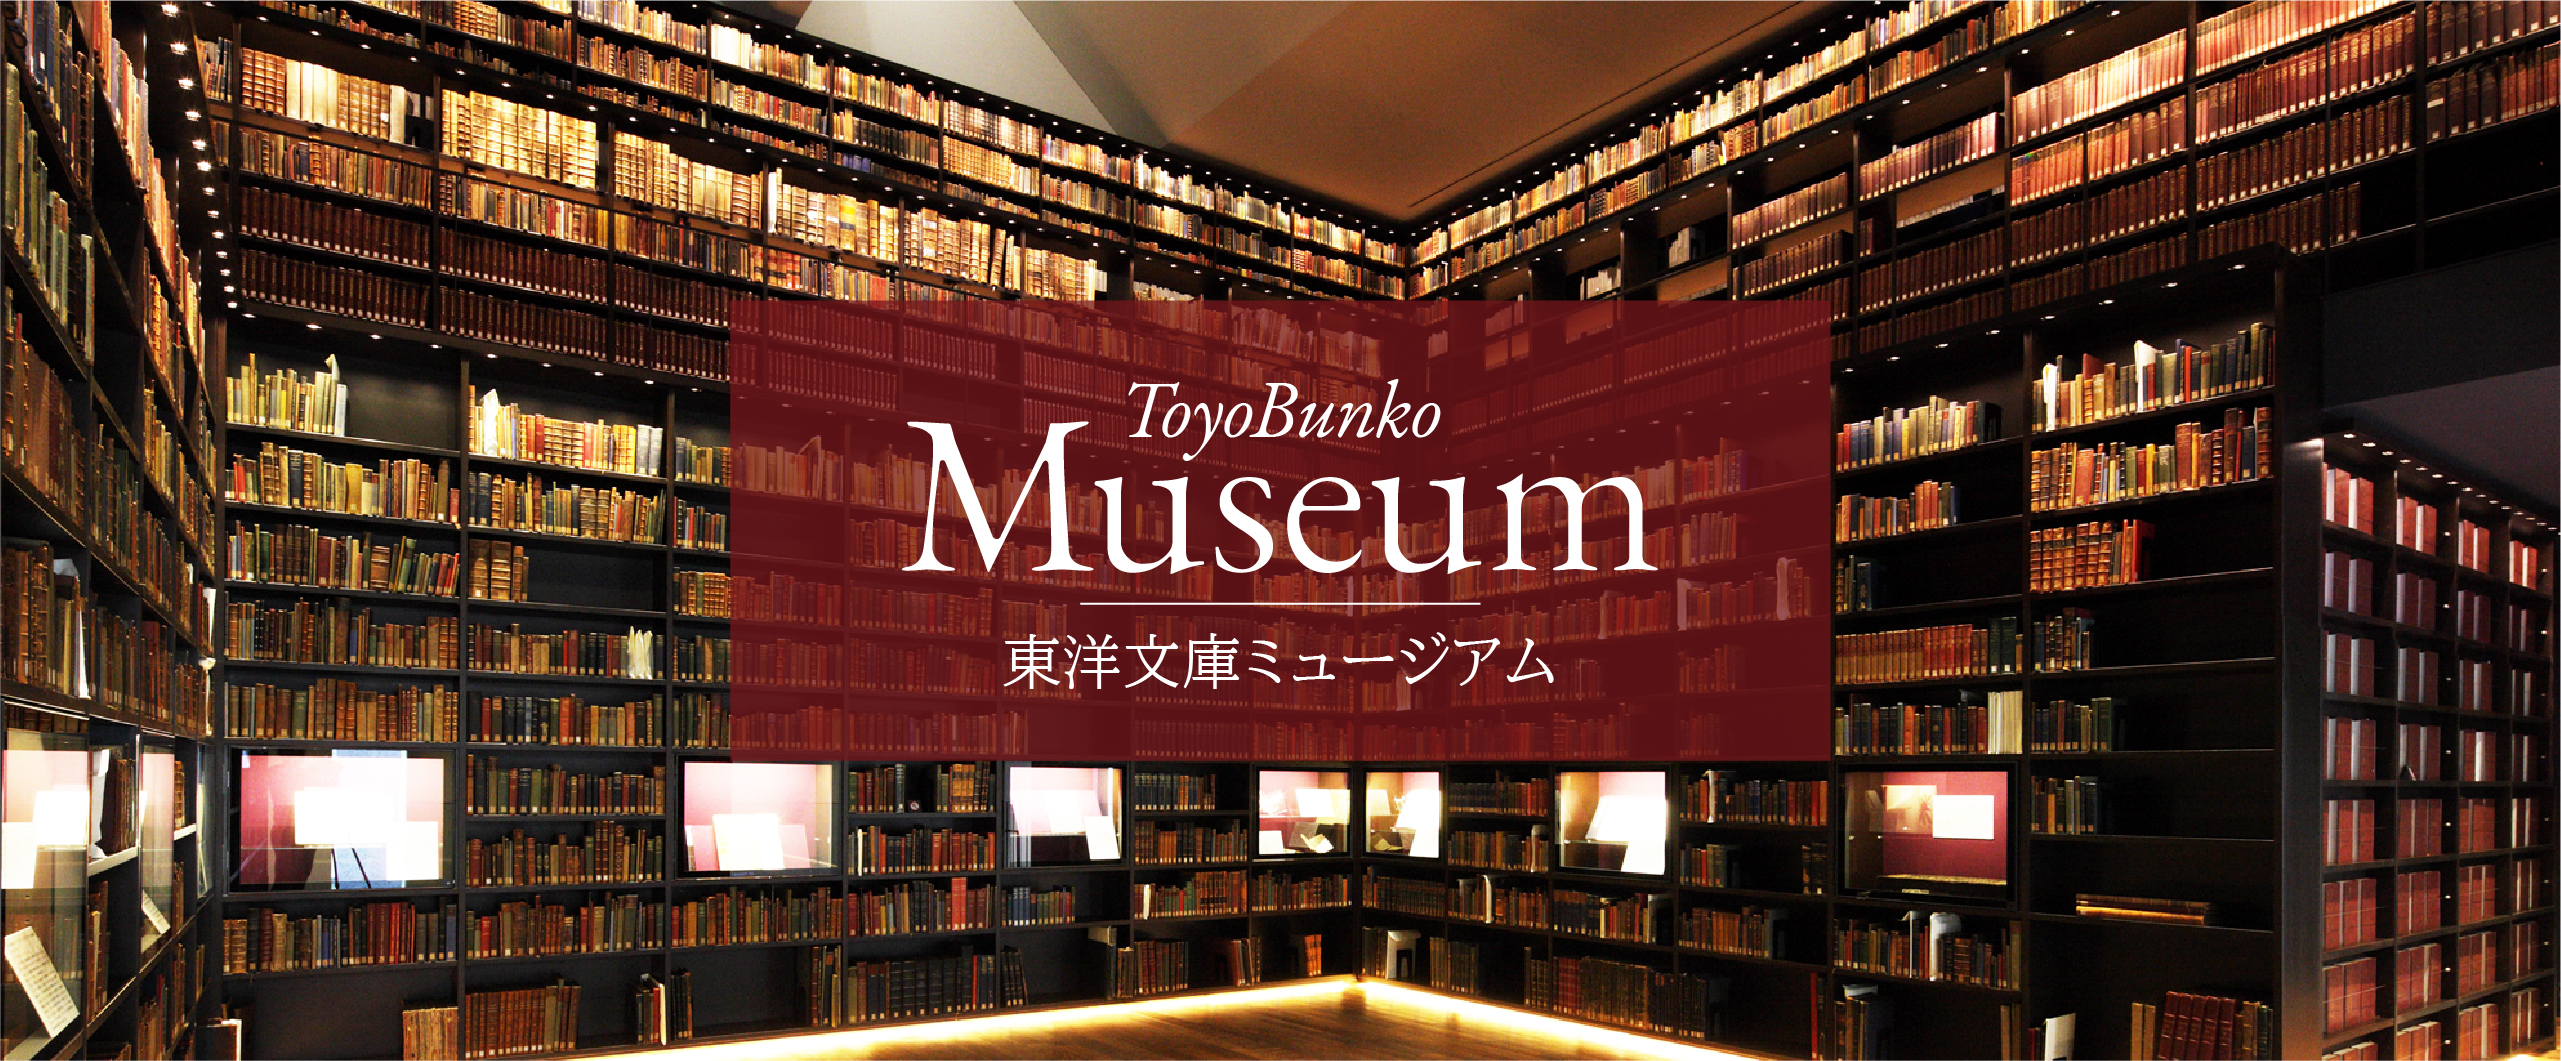 ToyoBunko Museum